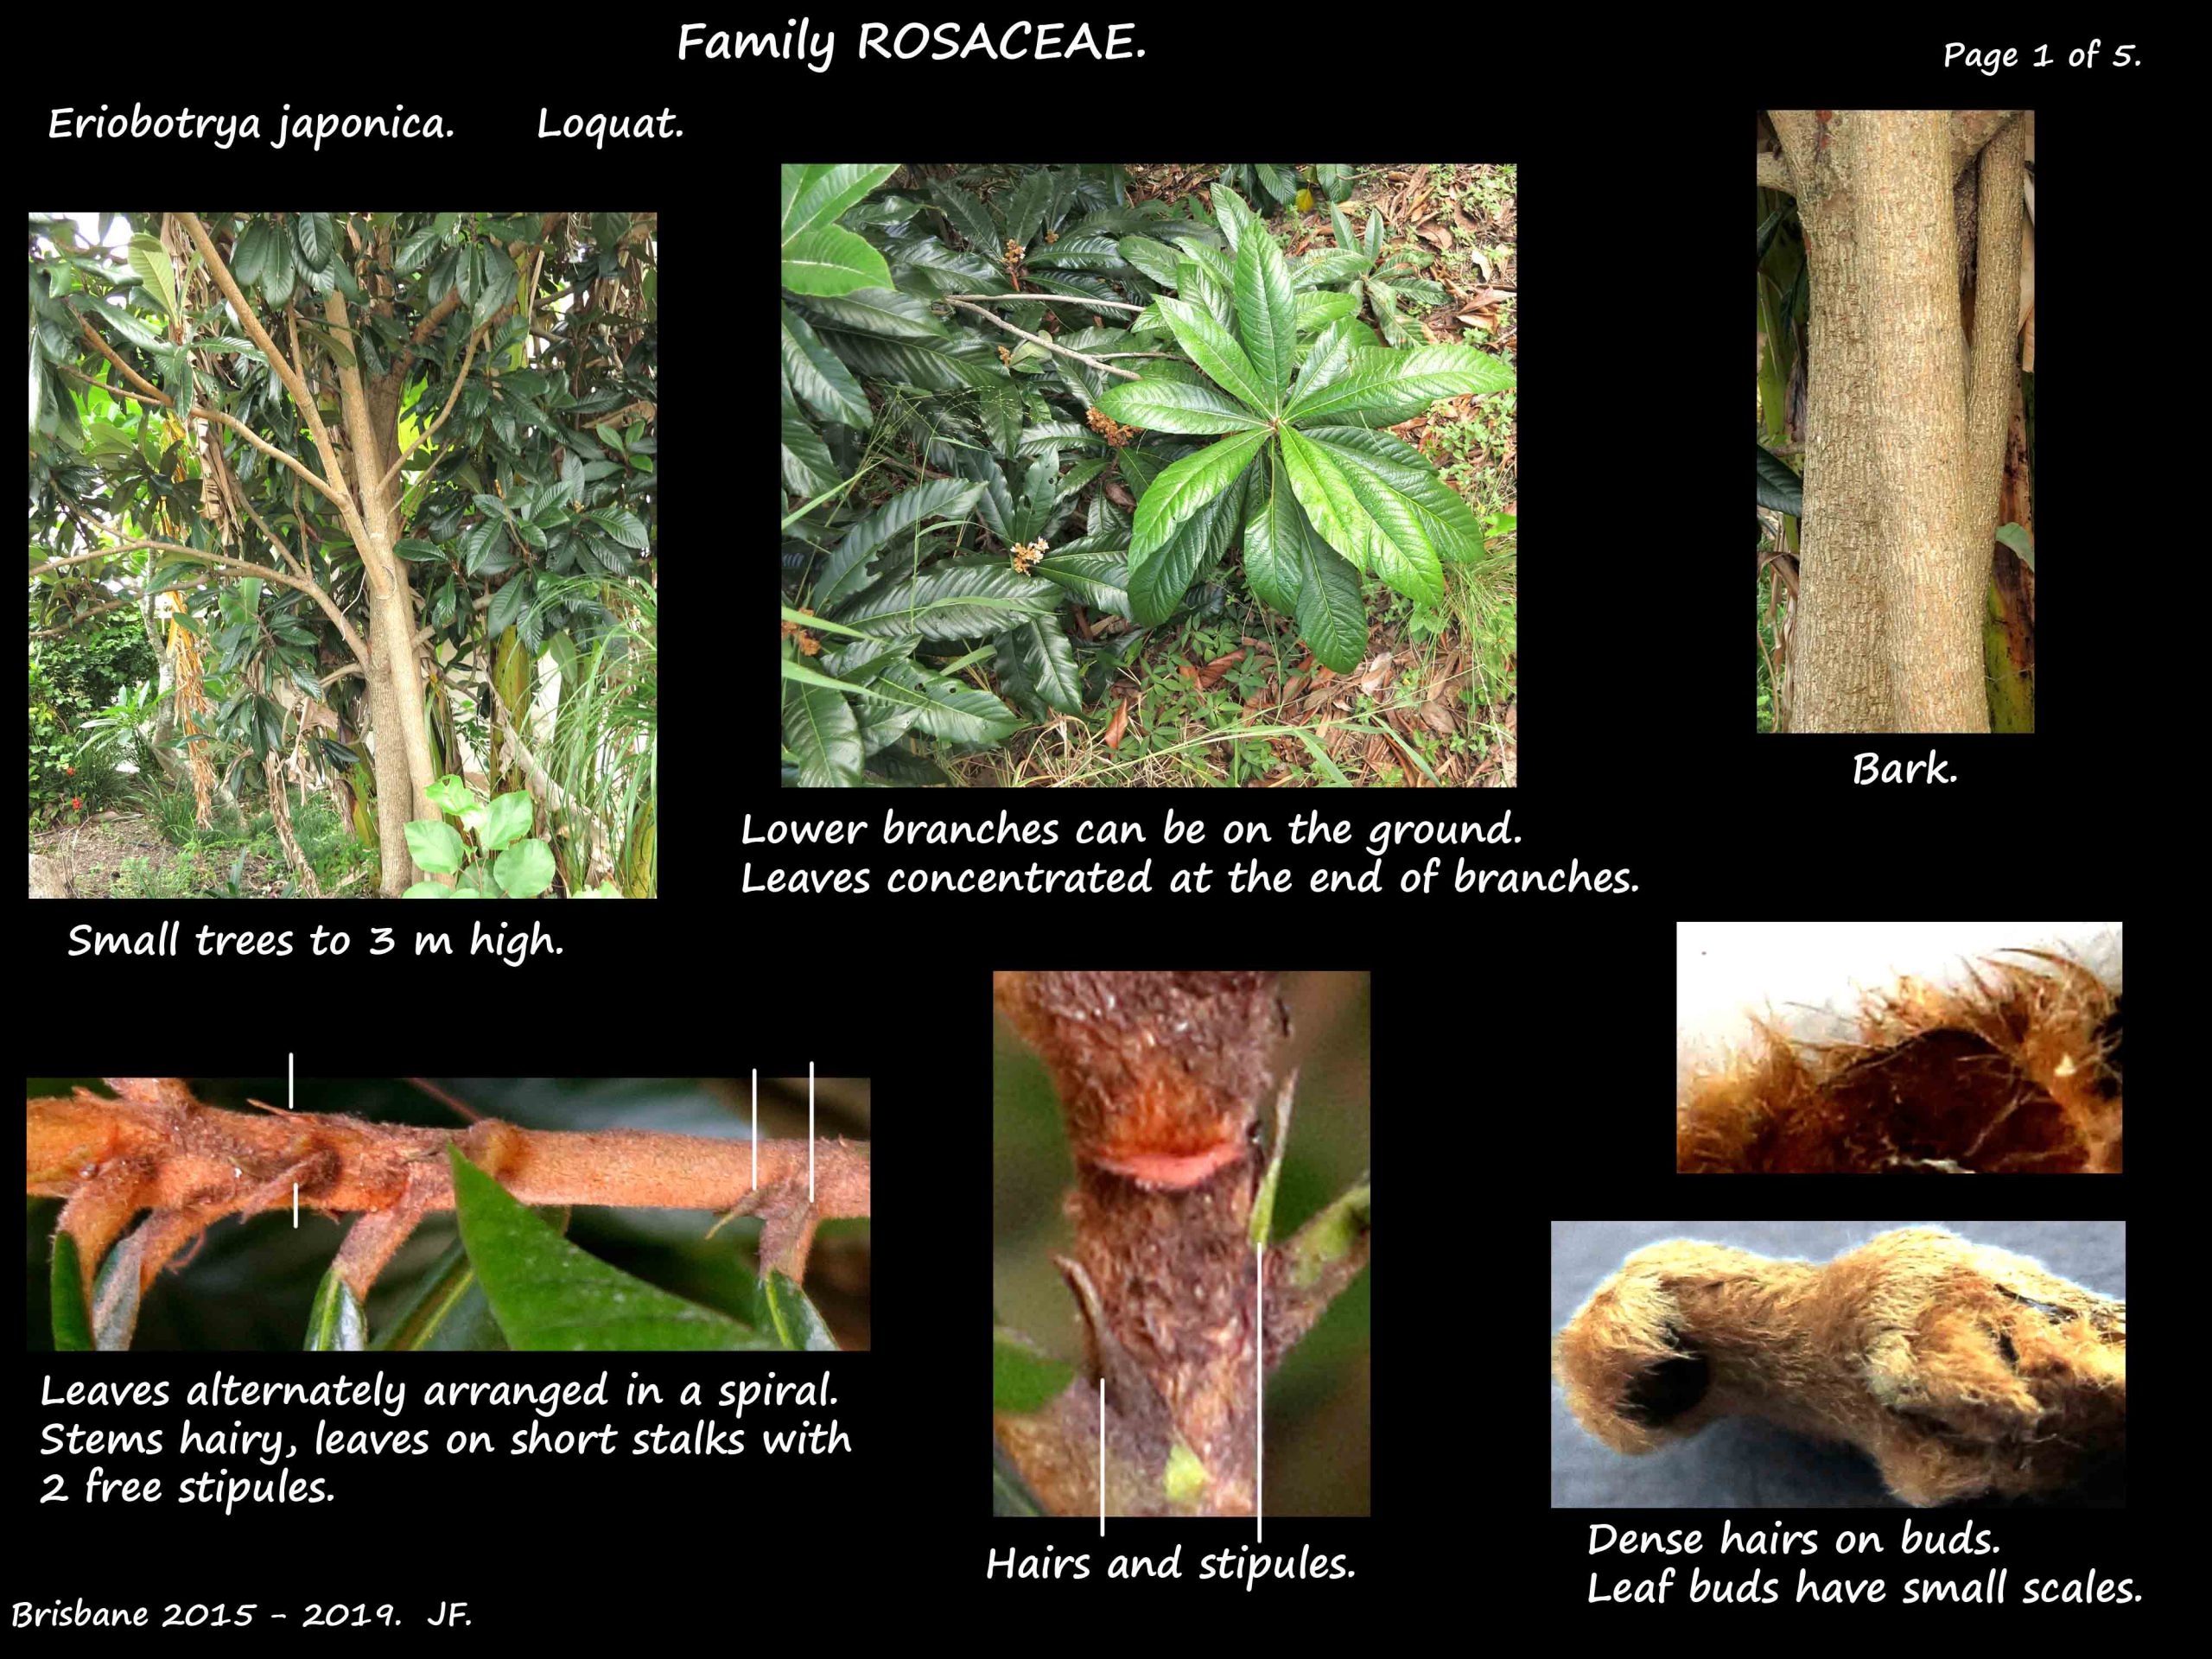 1 Eriobotrya japonica tree & stems